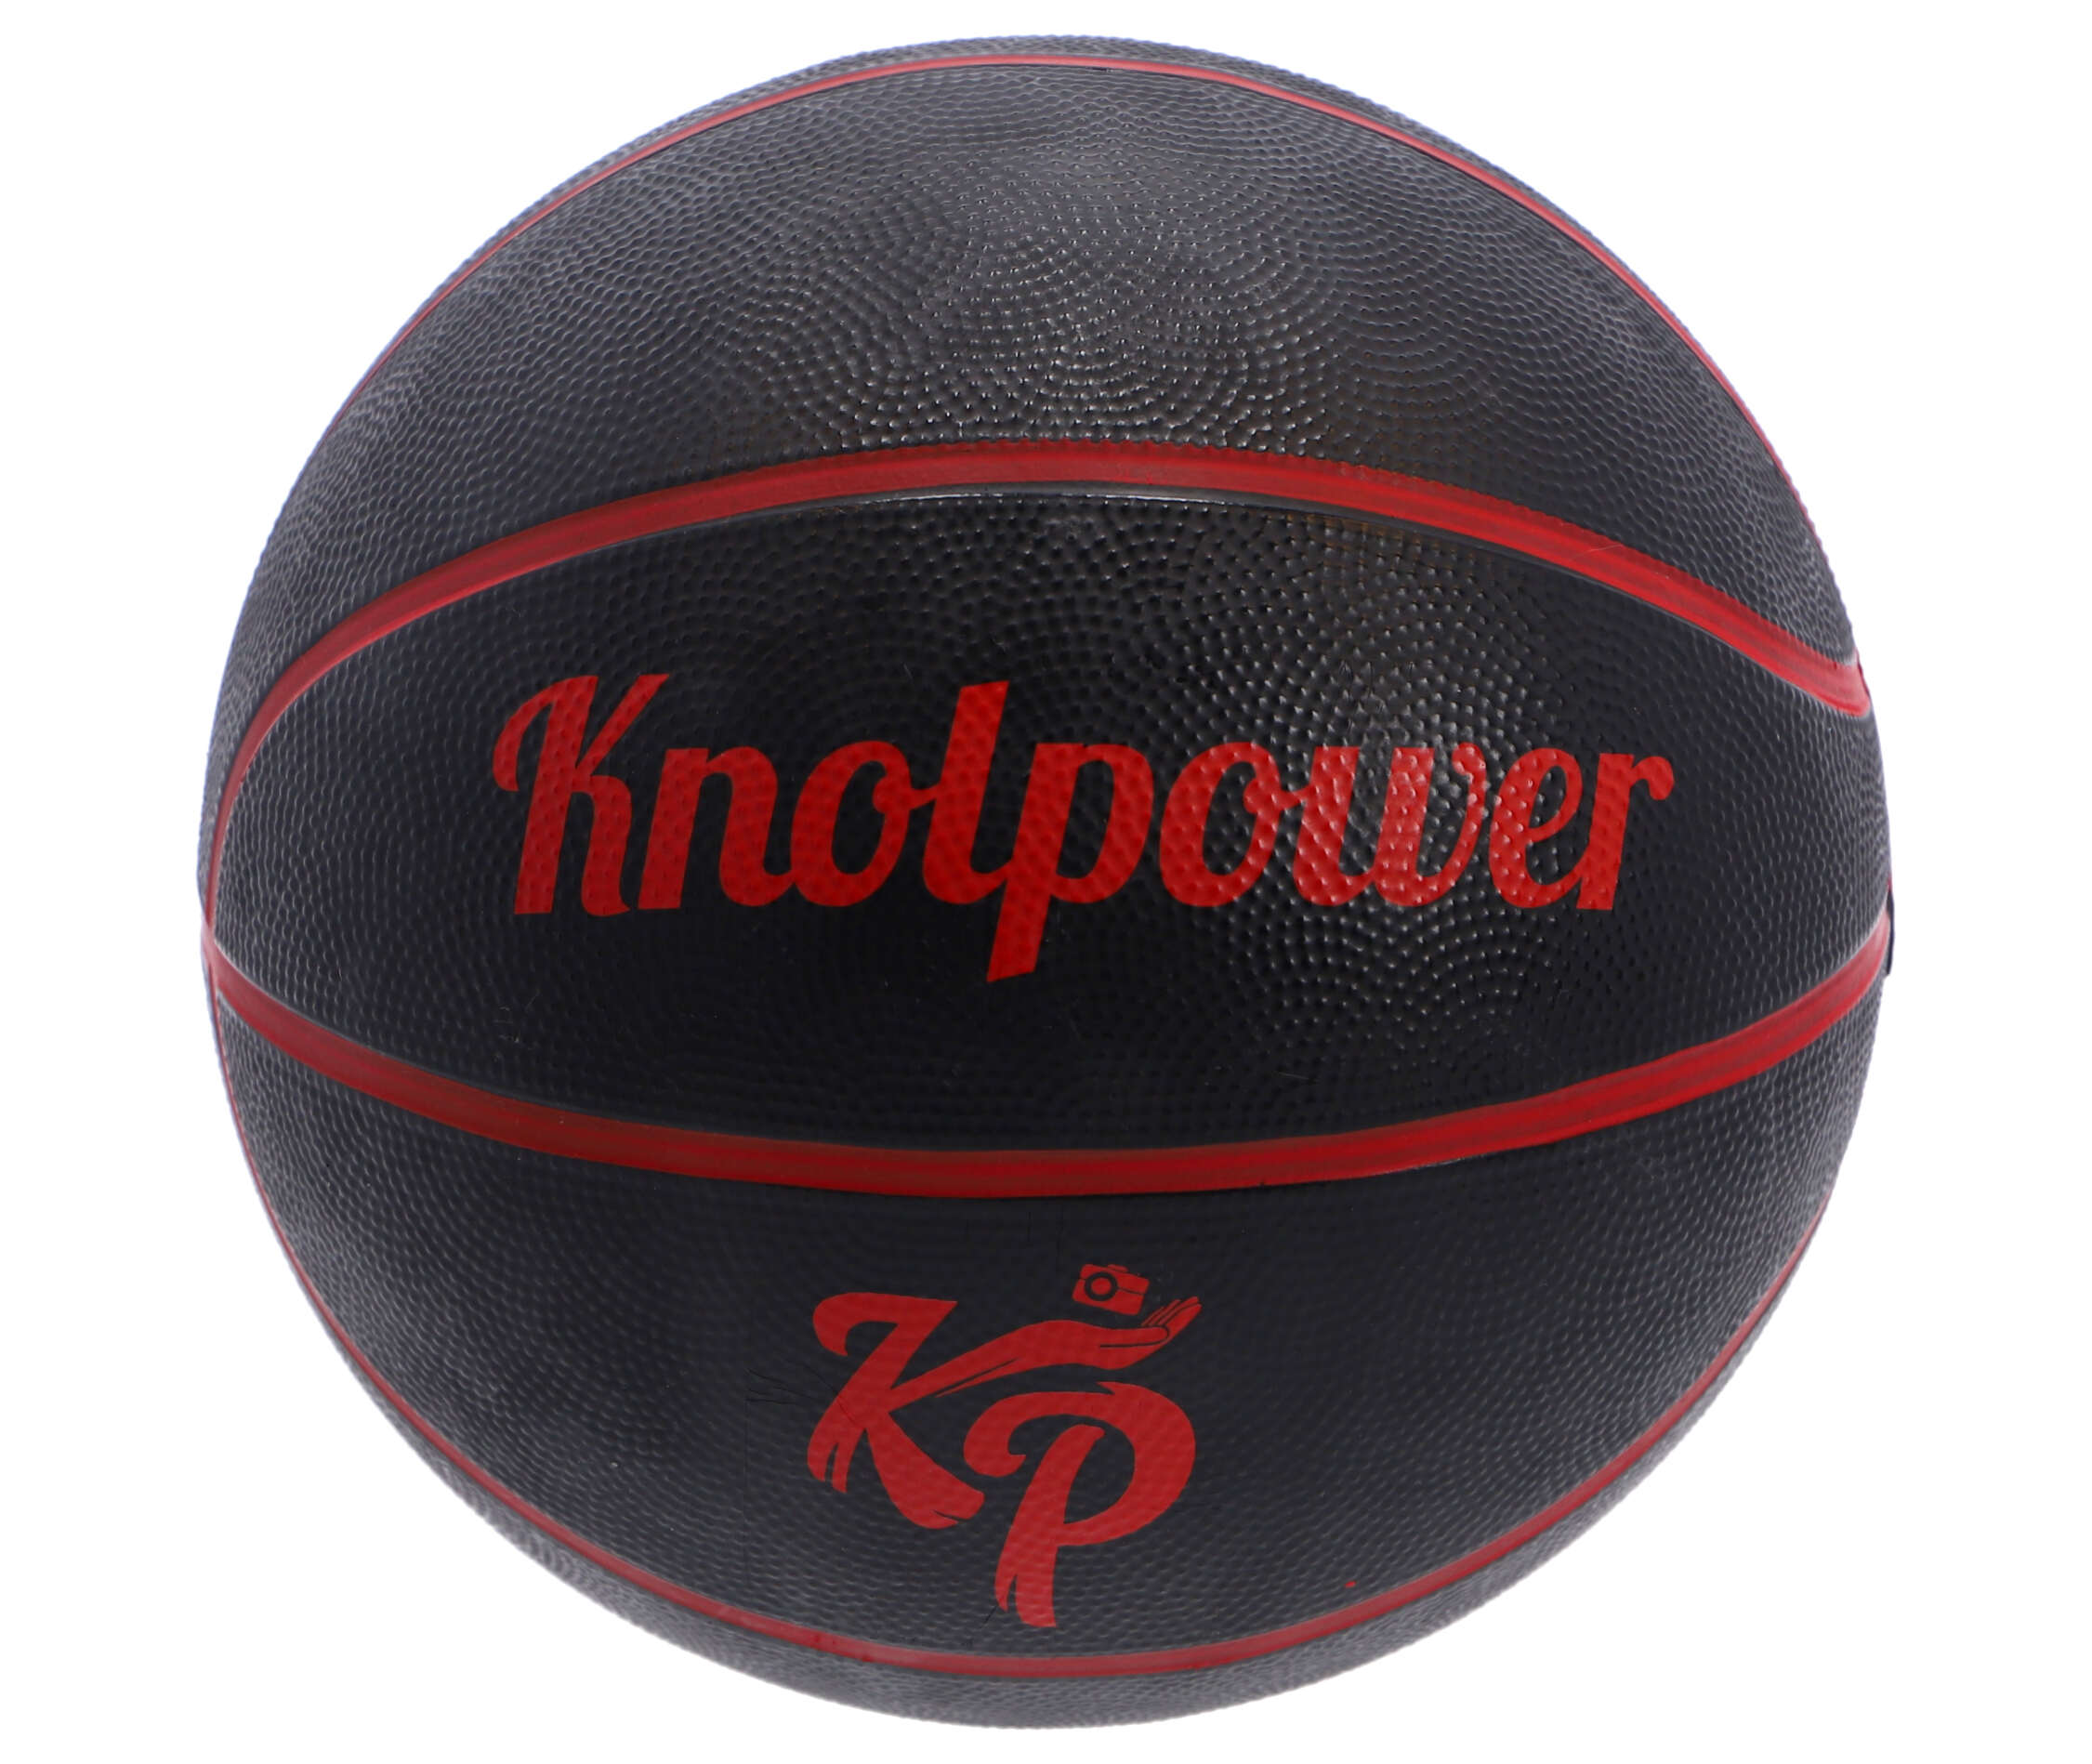 Knol Power Basketbal Maat 7